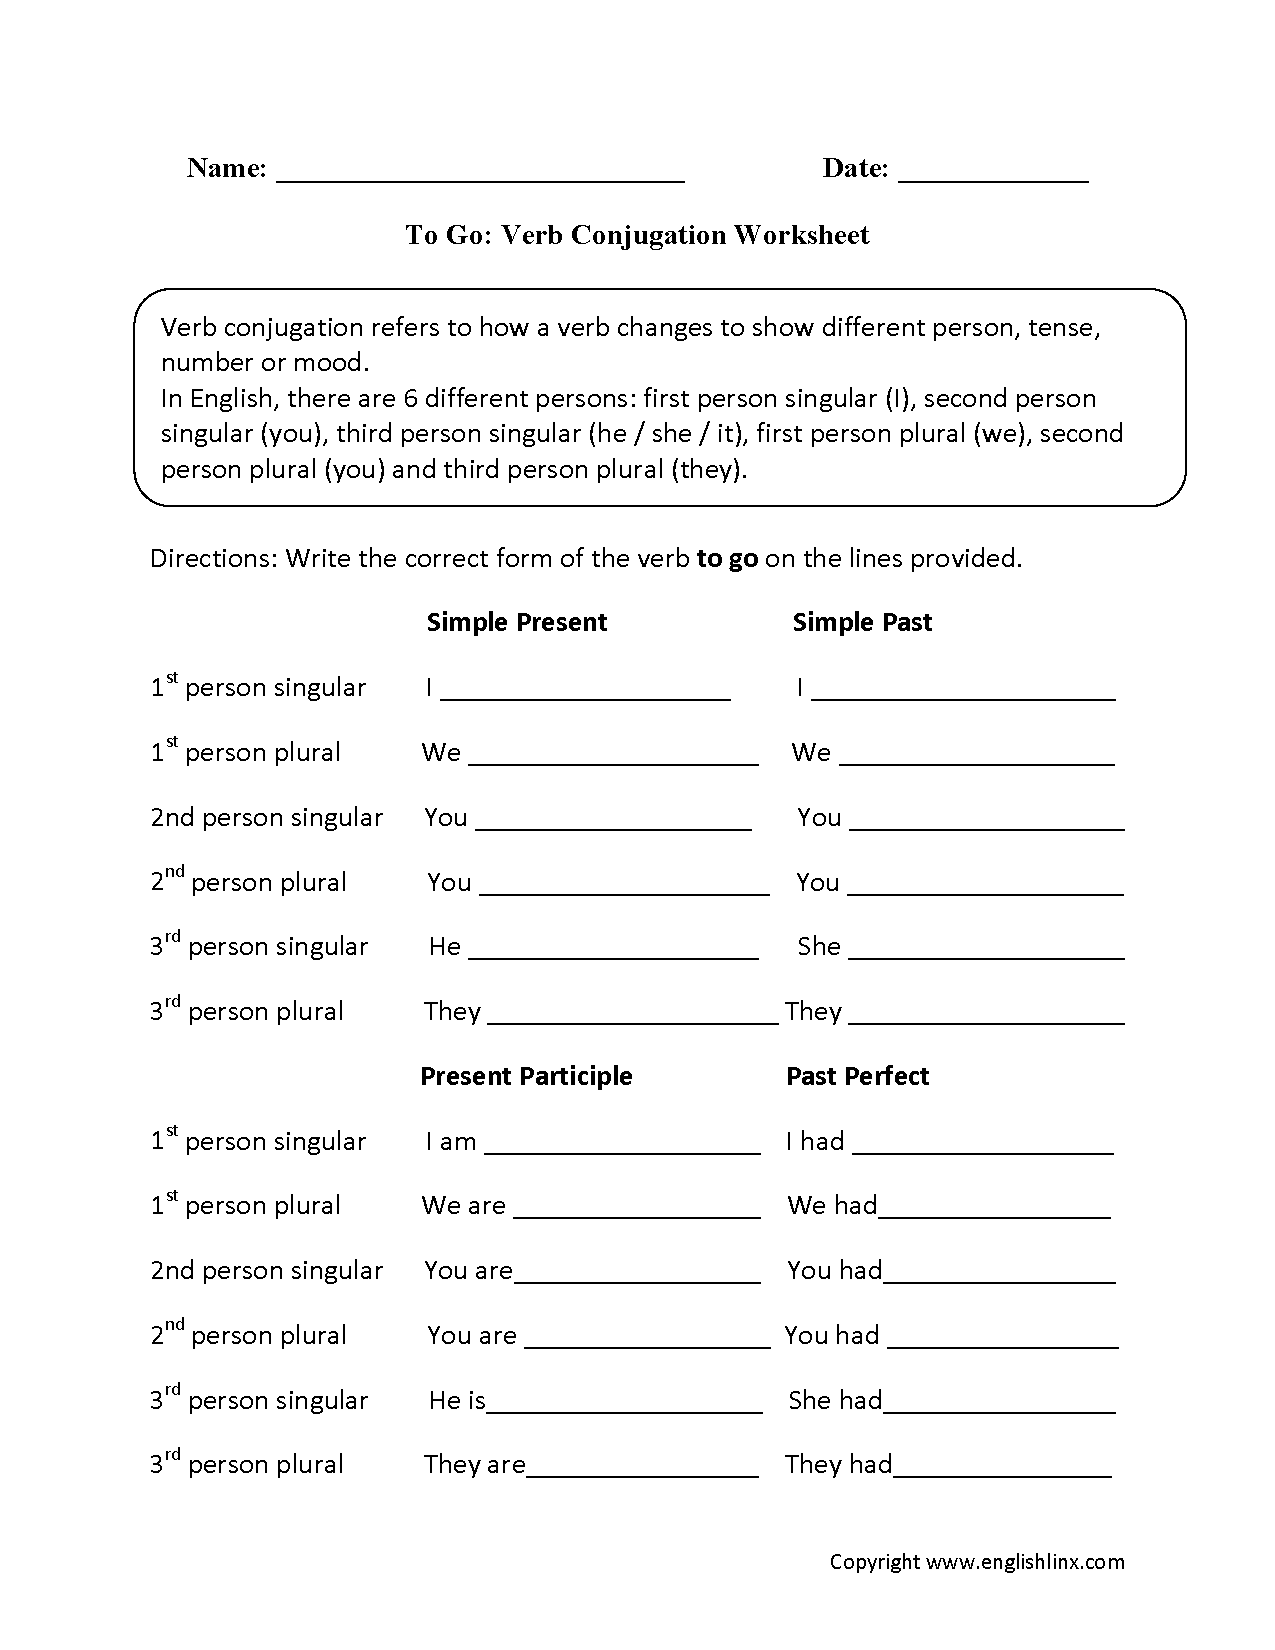 Verbs Worksheets Verb Conjugation Worksheets